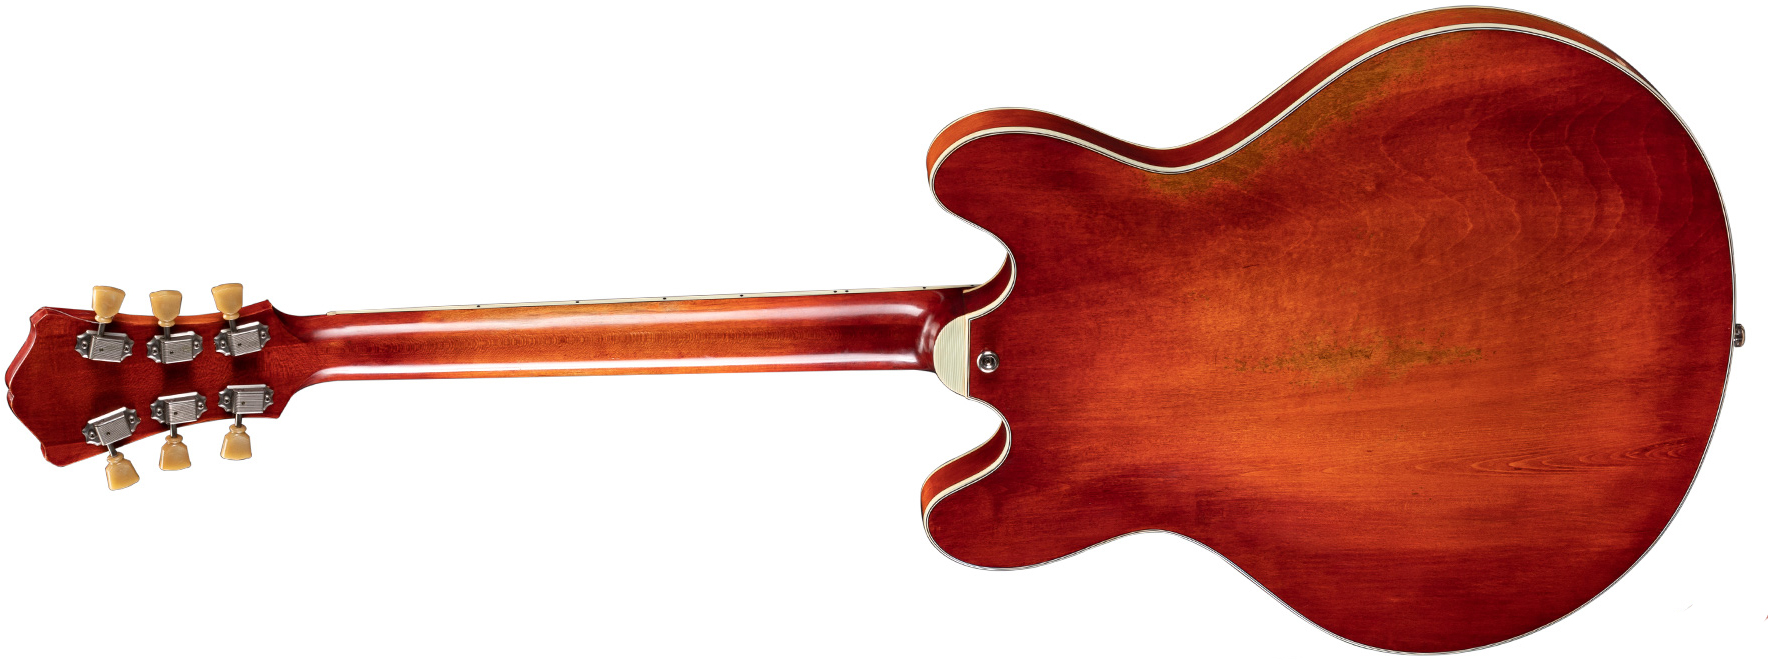 Eastman T64/v-t Thinline Laminate Tout Erable 2p90 Lollar Ht Eb - Classic - Semi-hollow electric guitar - Variation 1